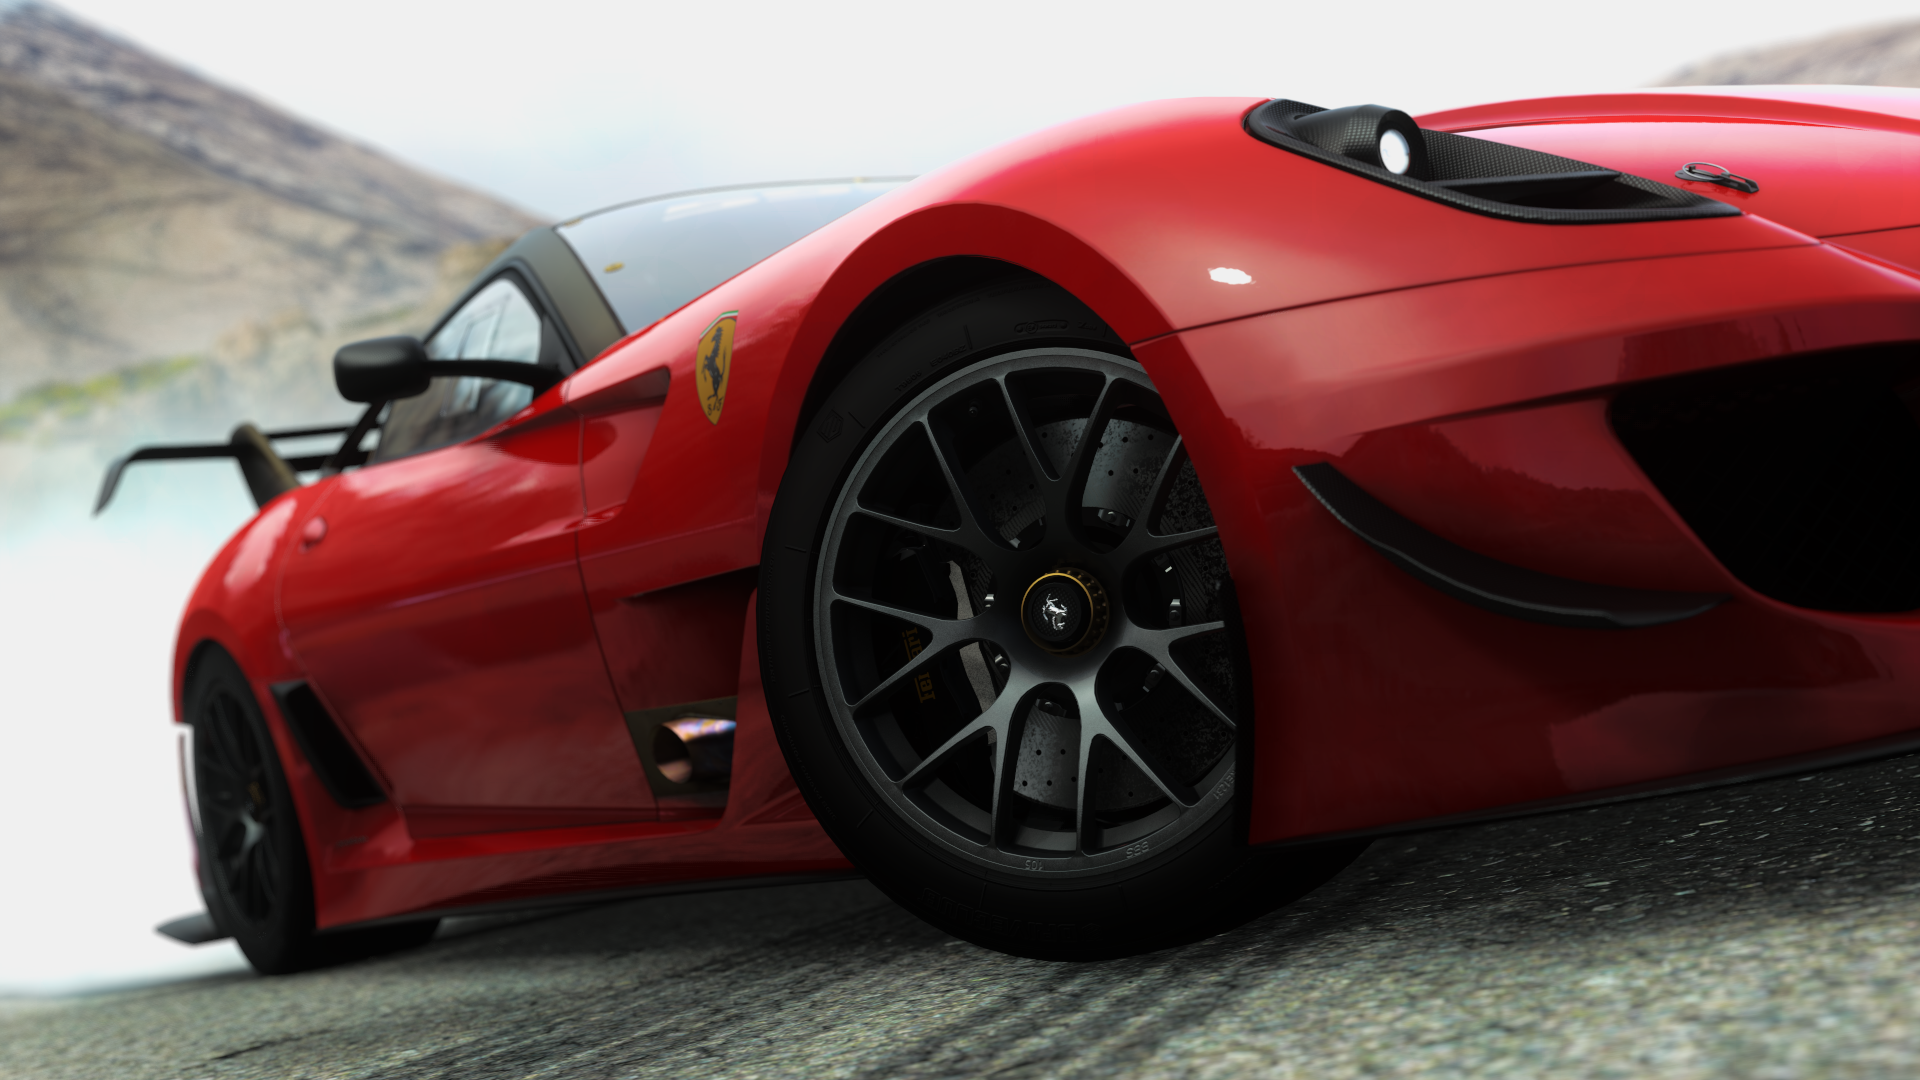 General 1920x1080 Driveclub Ferrari smoke rims video games red cars car vehicle screen shot